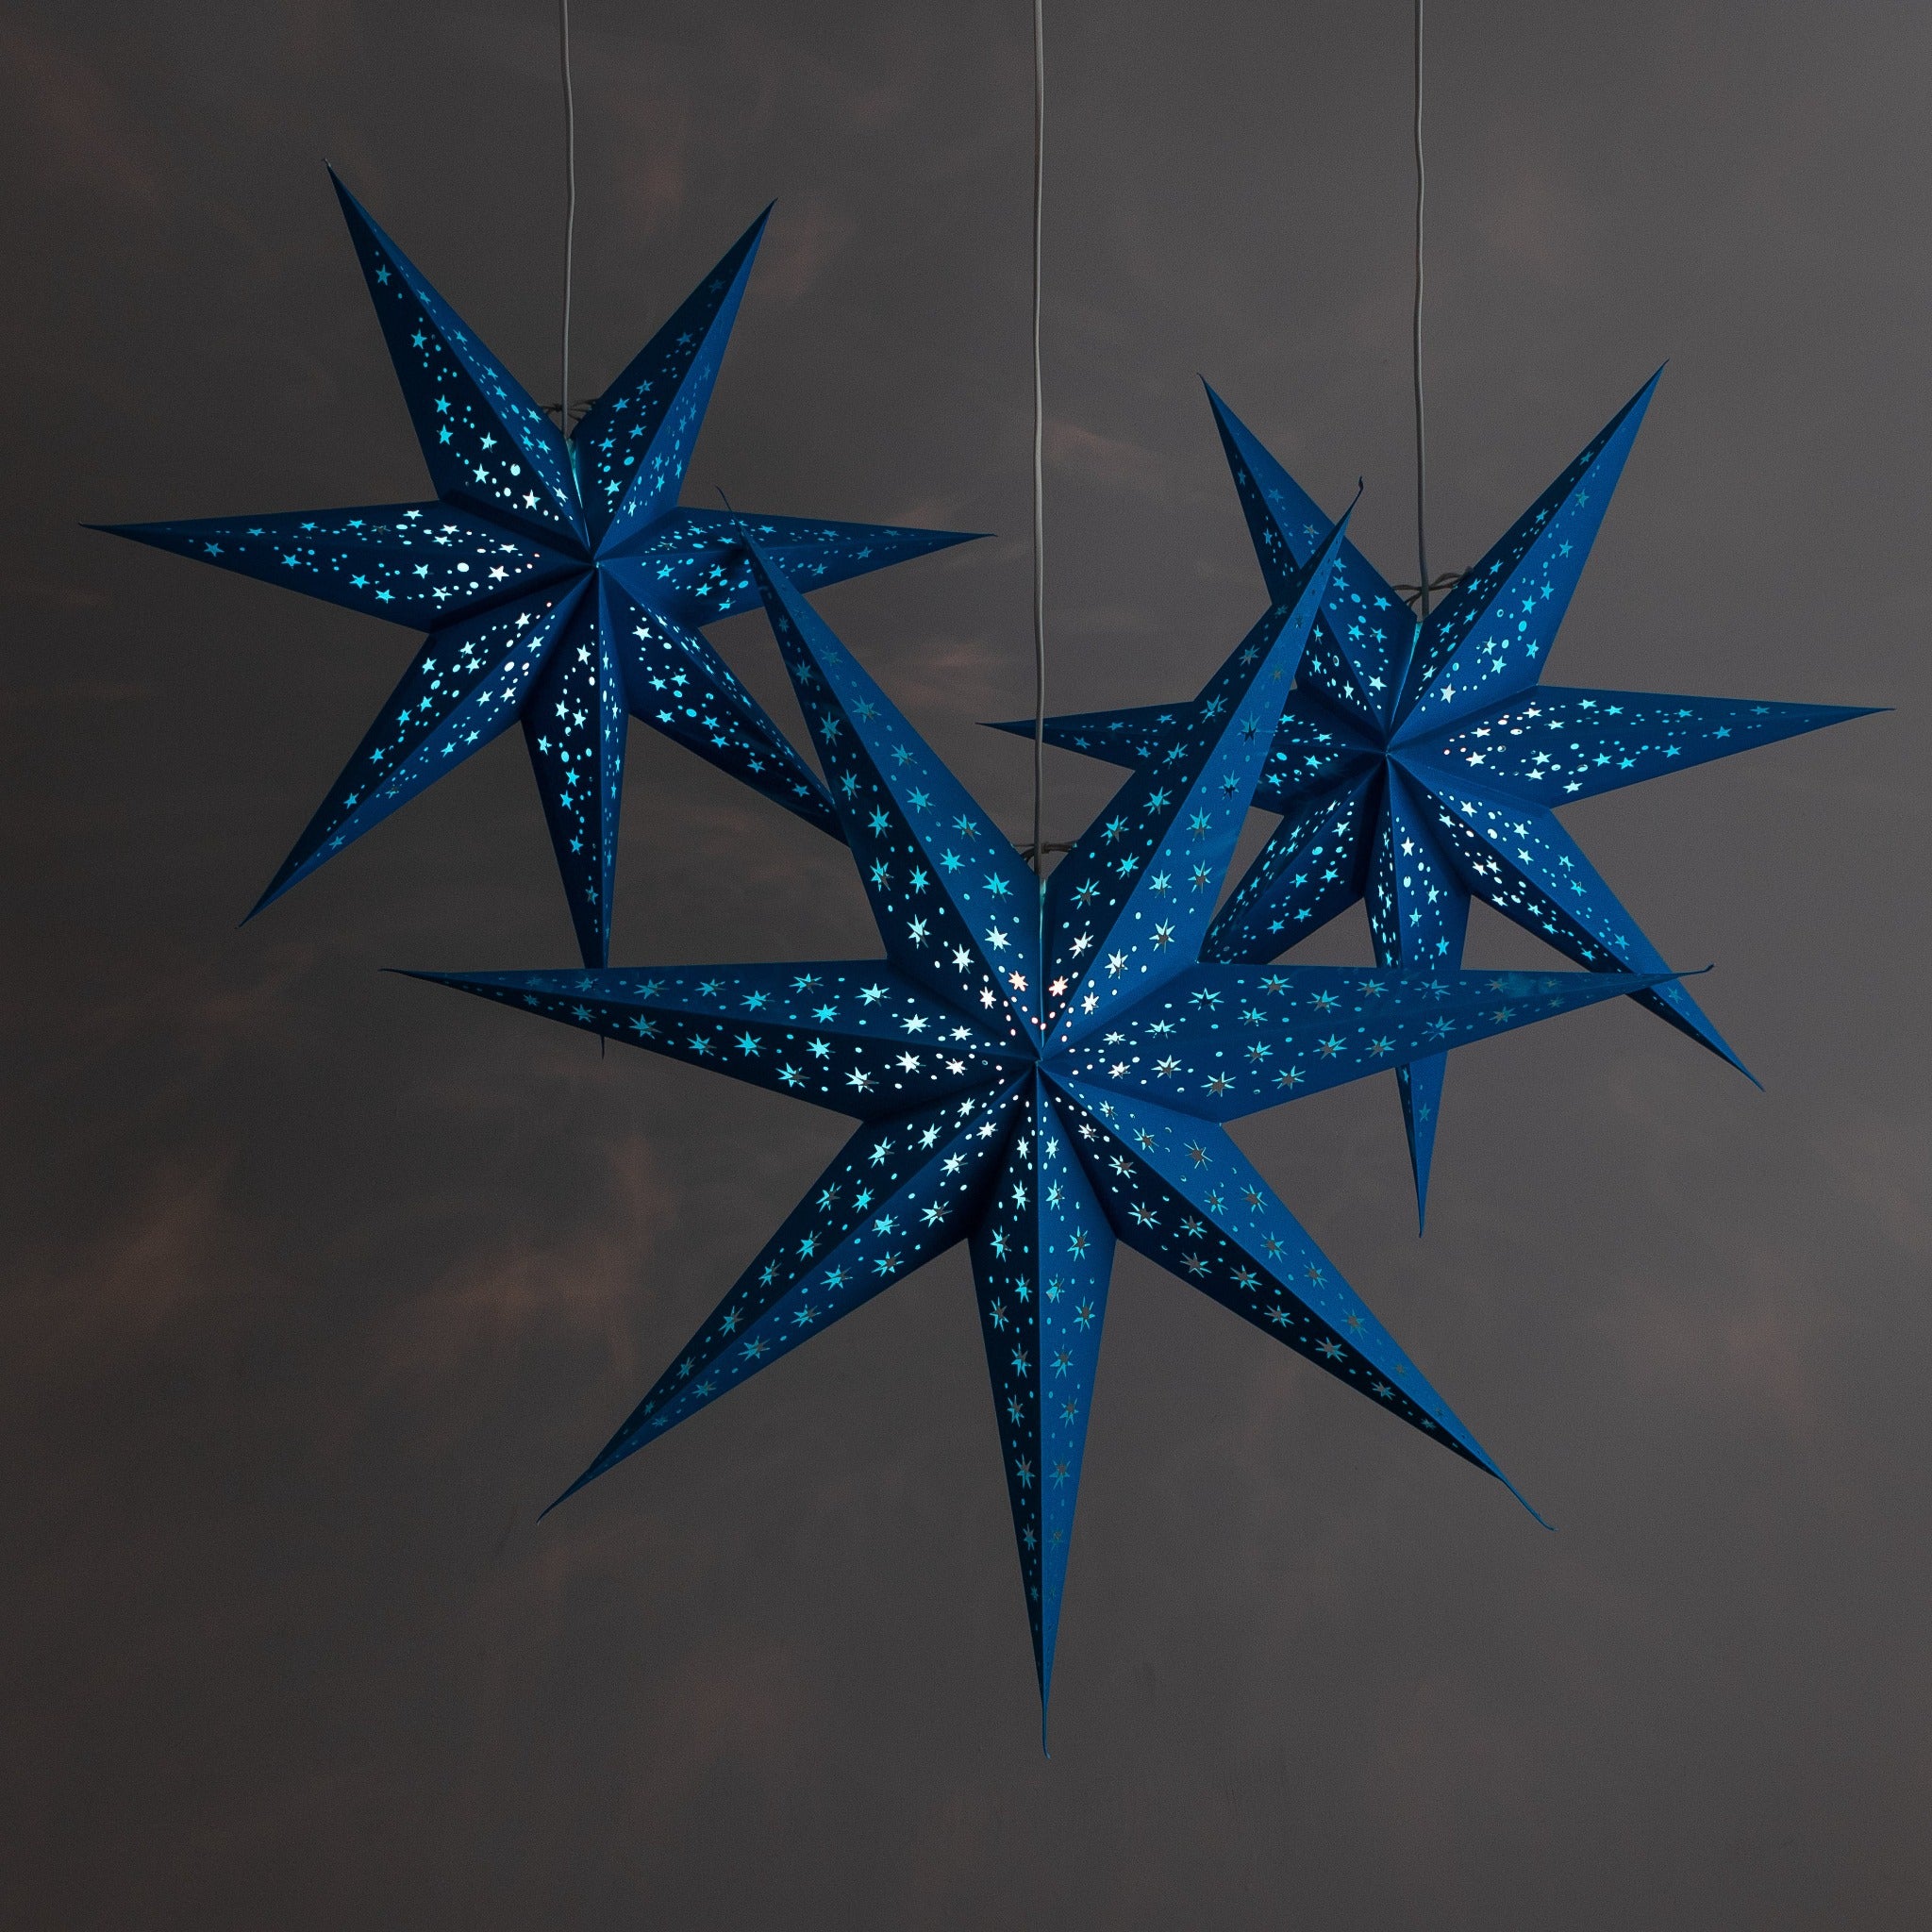 3 blue paper star lanterns illuminated